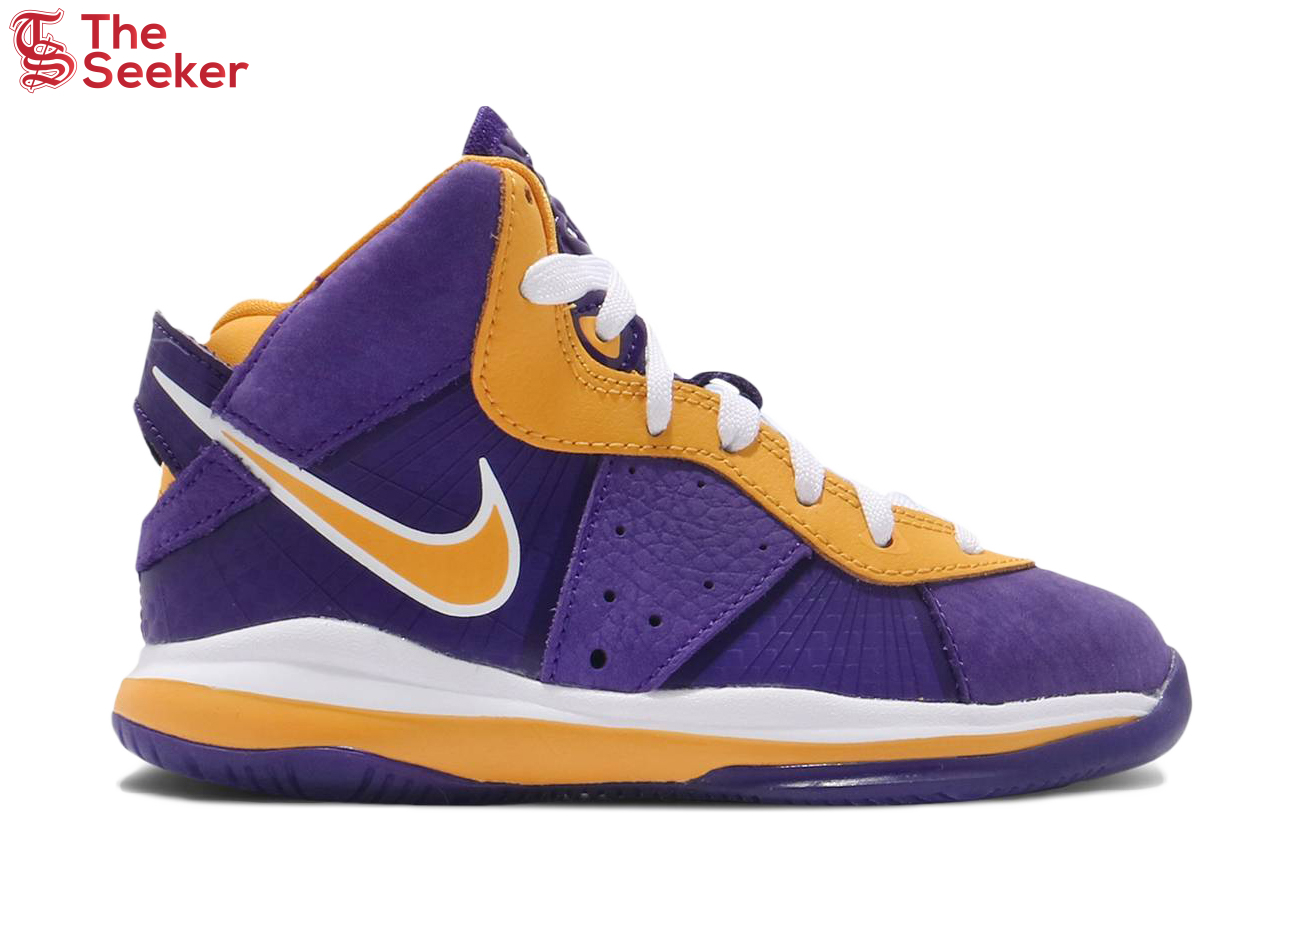 Nike LeBron 8 Lakers (PS)